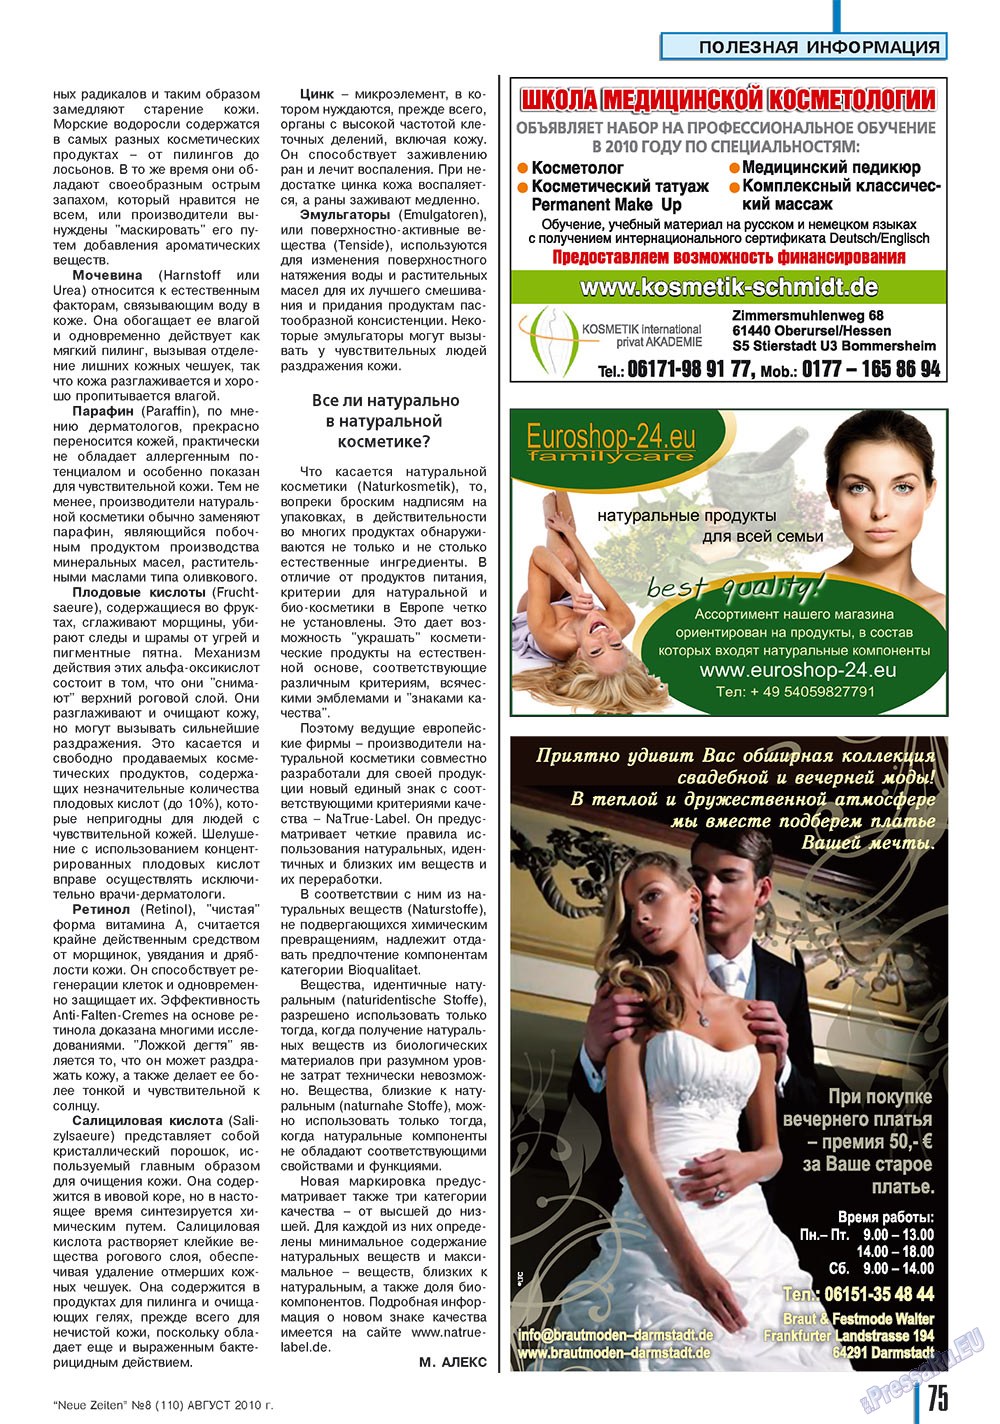 Neue Zeiten (журнал). 2010 год, номер 8, стр. 75